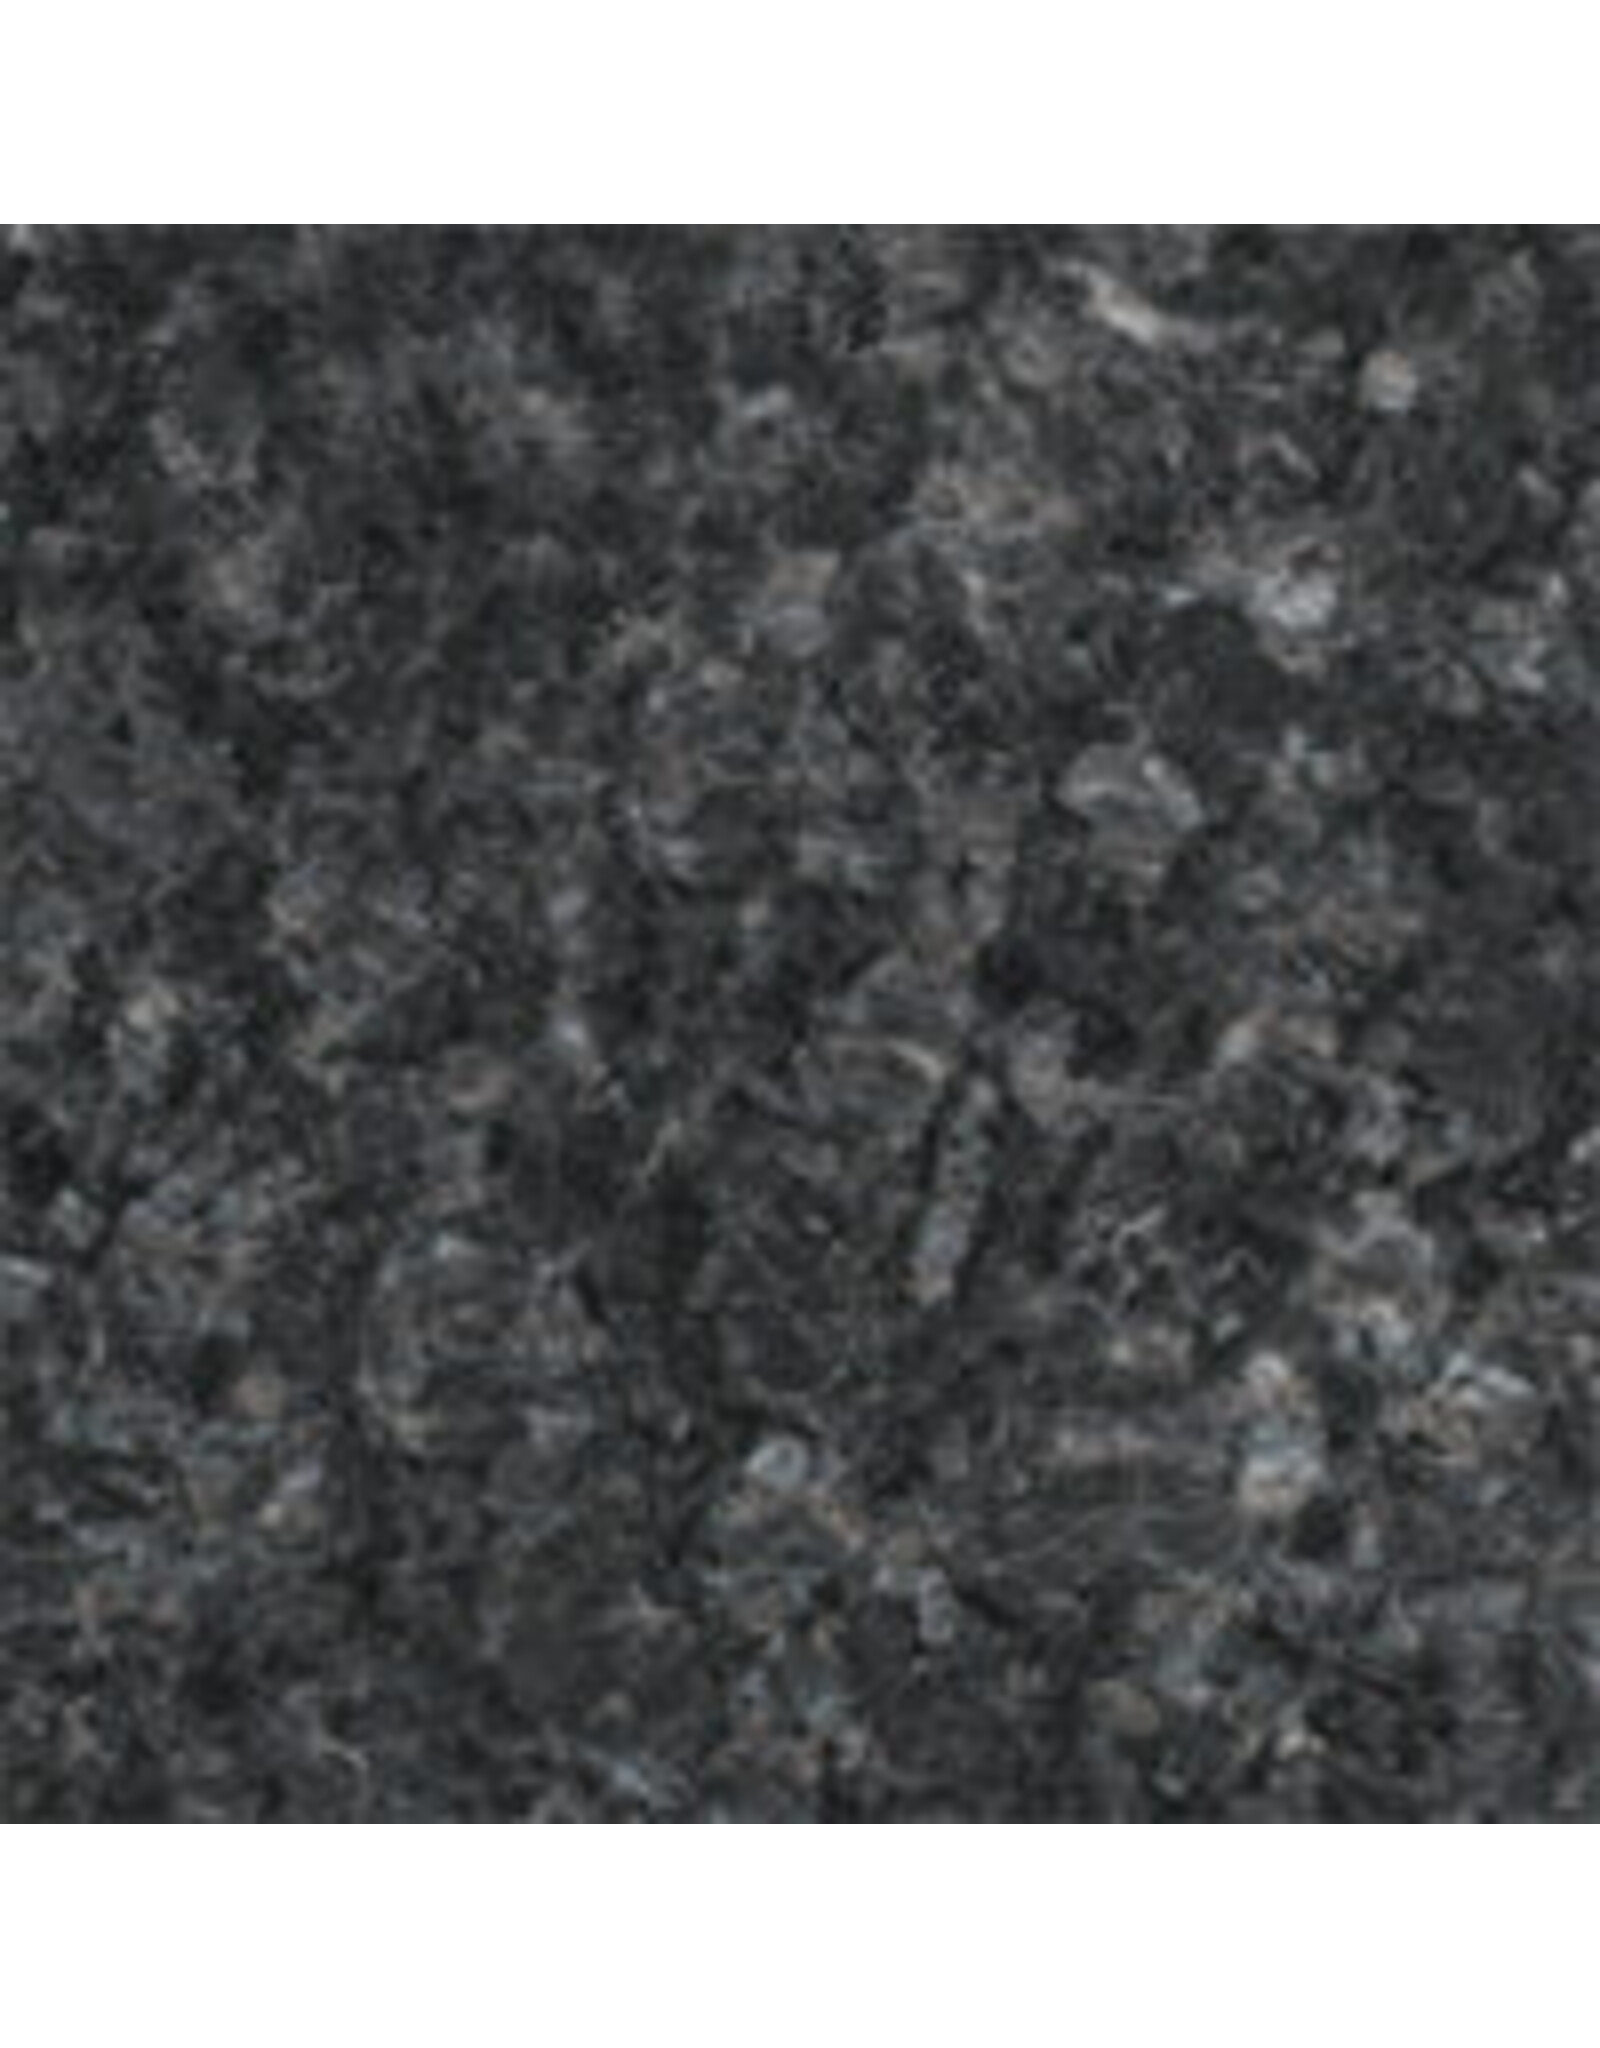 HKC Laminate Countertop 6280-58 Midnight Stone 25.25x96 (8ft)